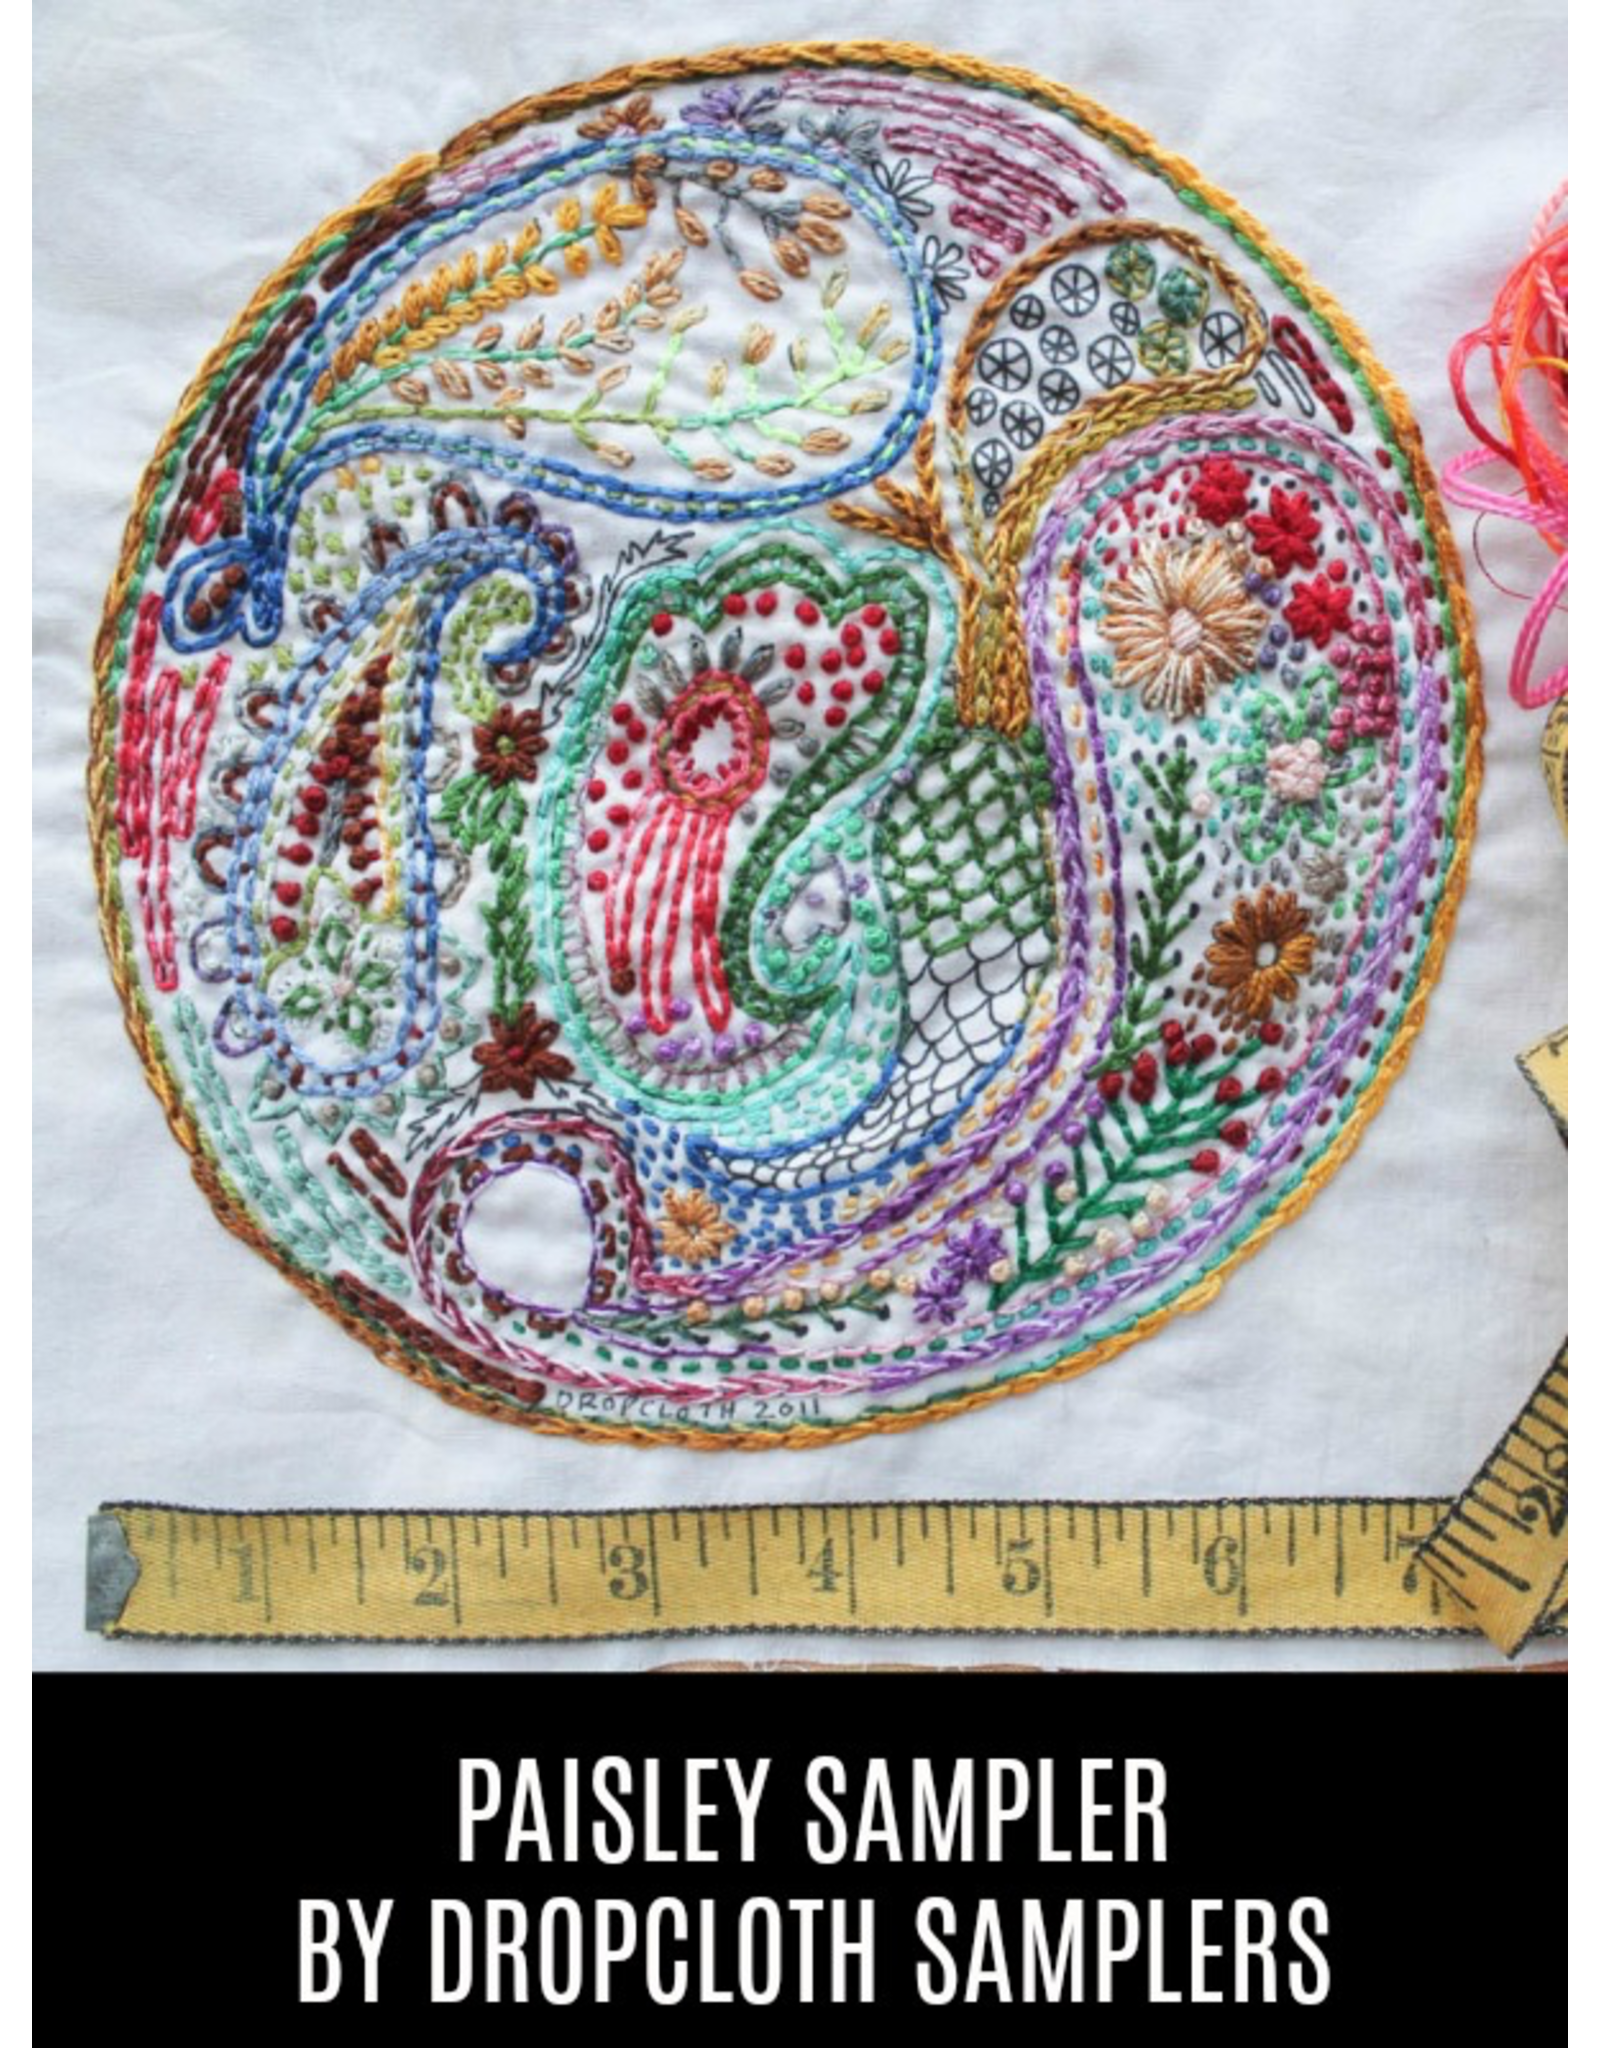 Dropcloth Samplers Paisley Sampler, Embroidery Sampler